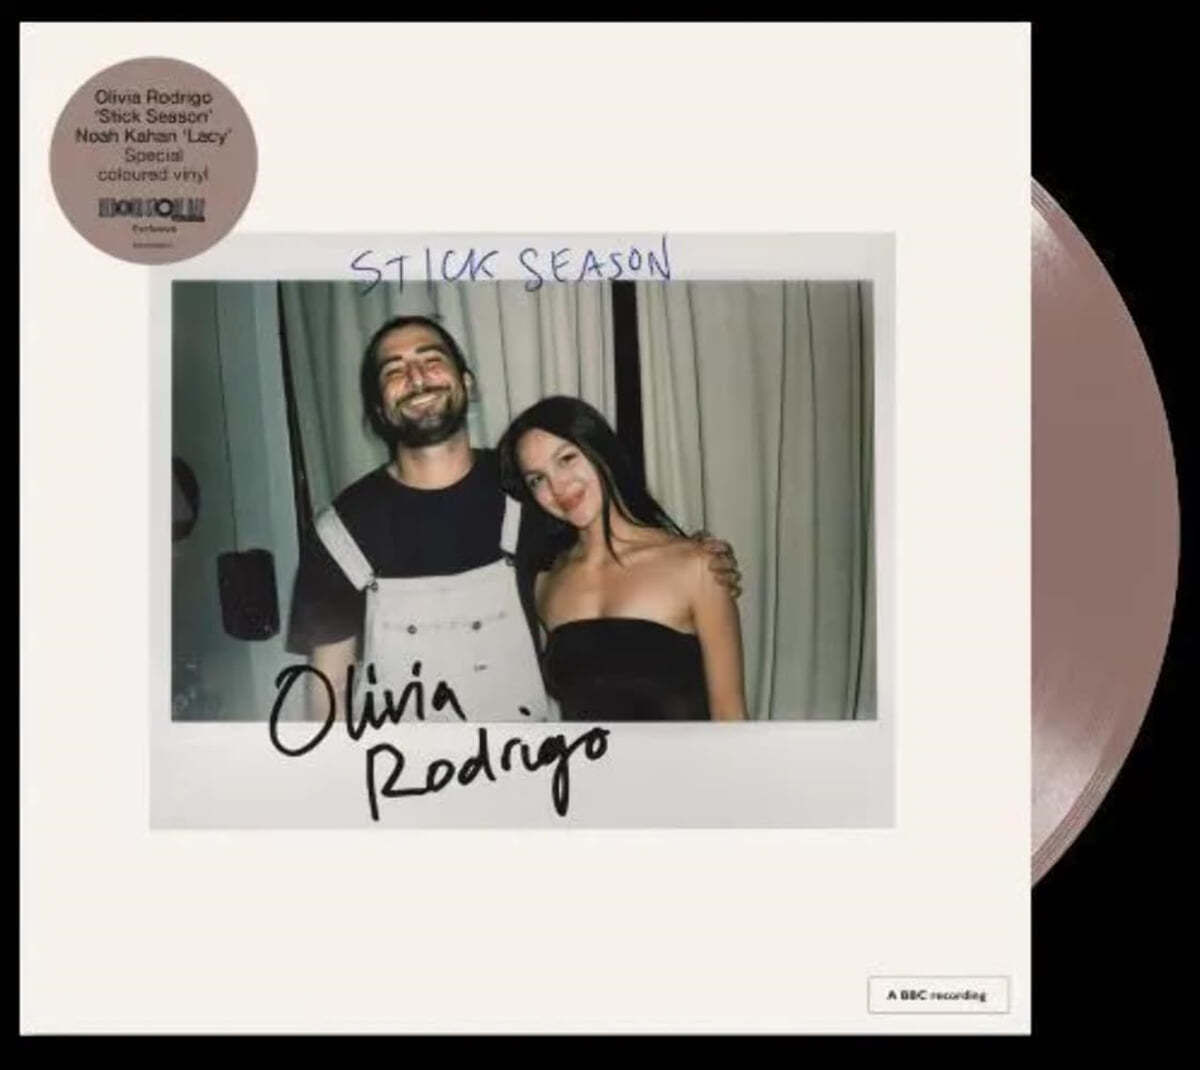 Olivia Rodrigo &amp; Noah Kahan (올리비아 로드리고 &amp; 노아 카한) - Stick Season / Lacy (BBC Live Lounge) [7인치 컬러 Vinyl]